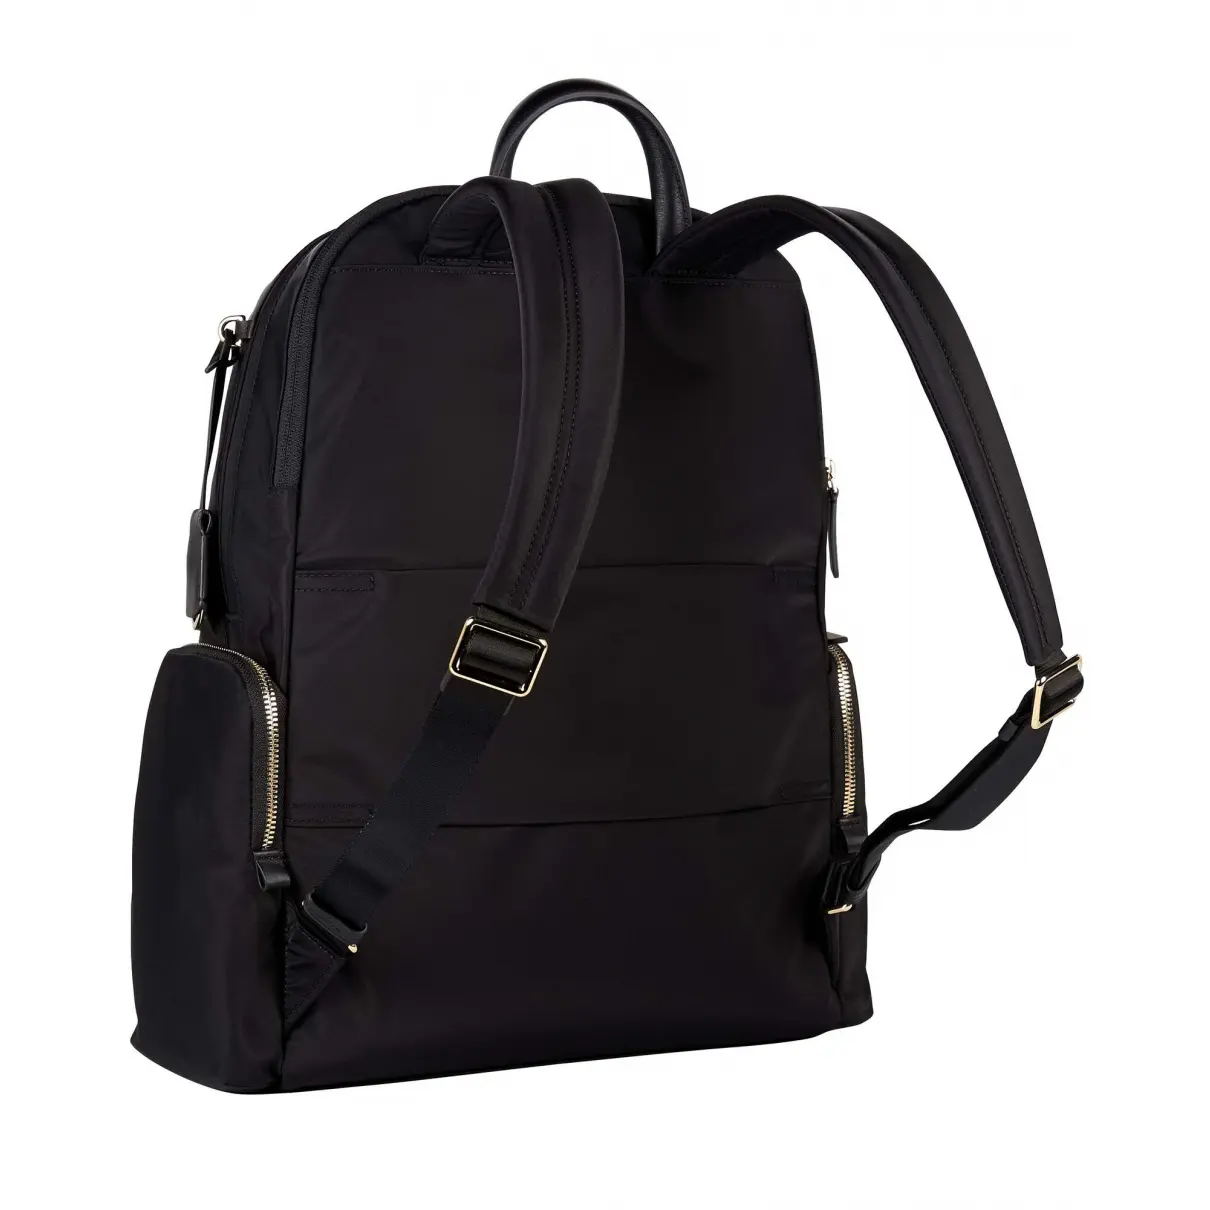 Buy Tumi Backpack online